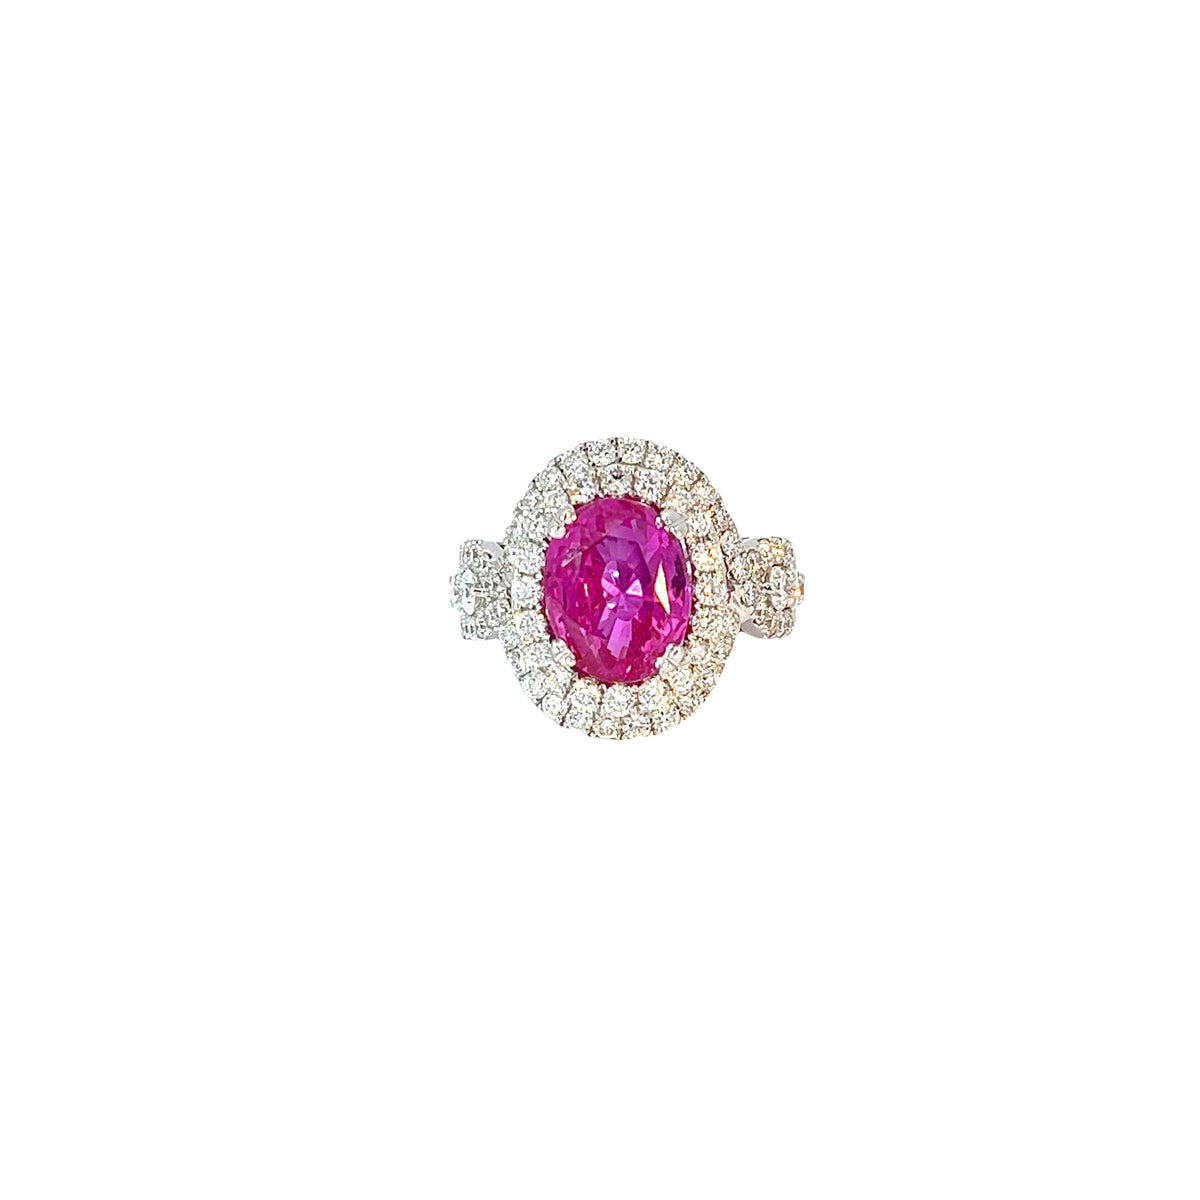 Ladies 18k White Gold Diamond and Purplish Pink Sapphire Ring